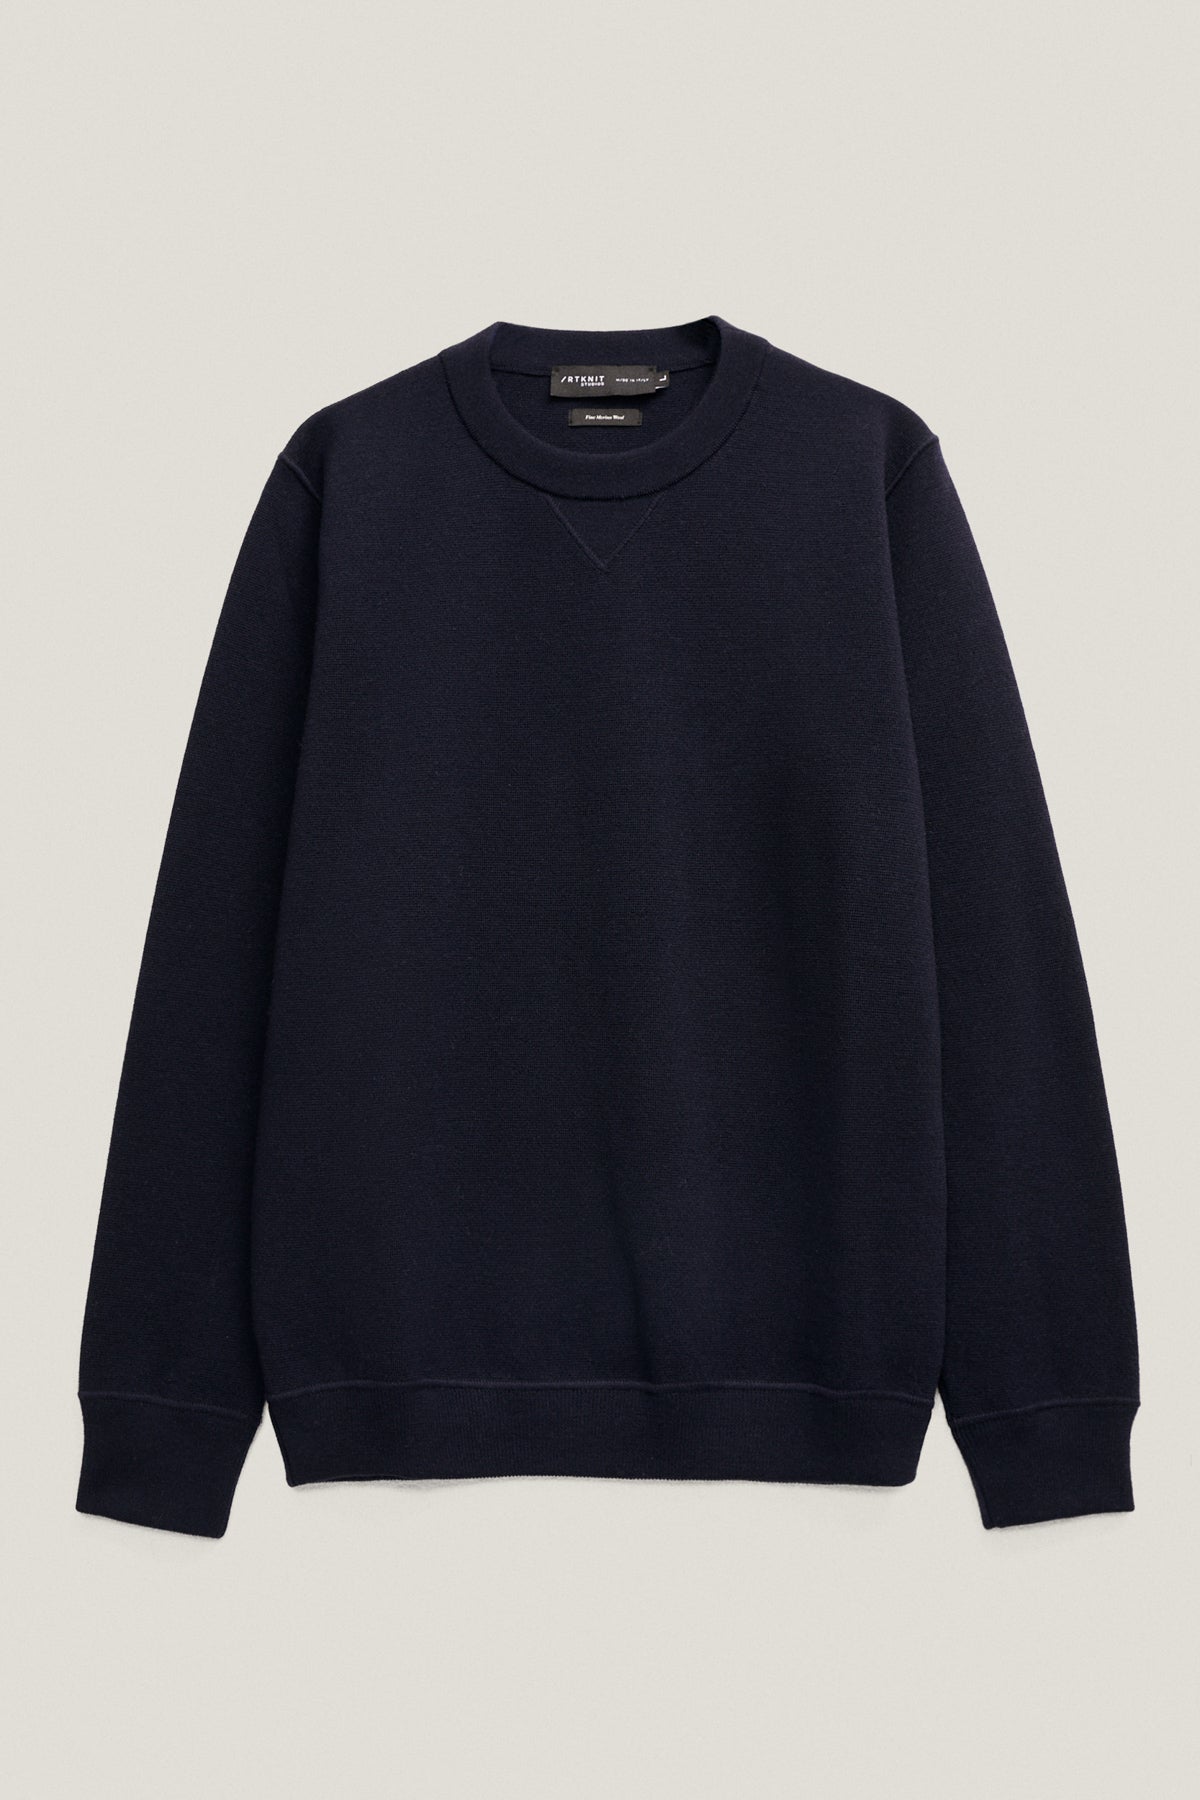 the merino wool sweatshirt oxford blue